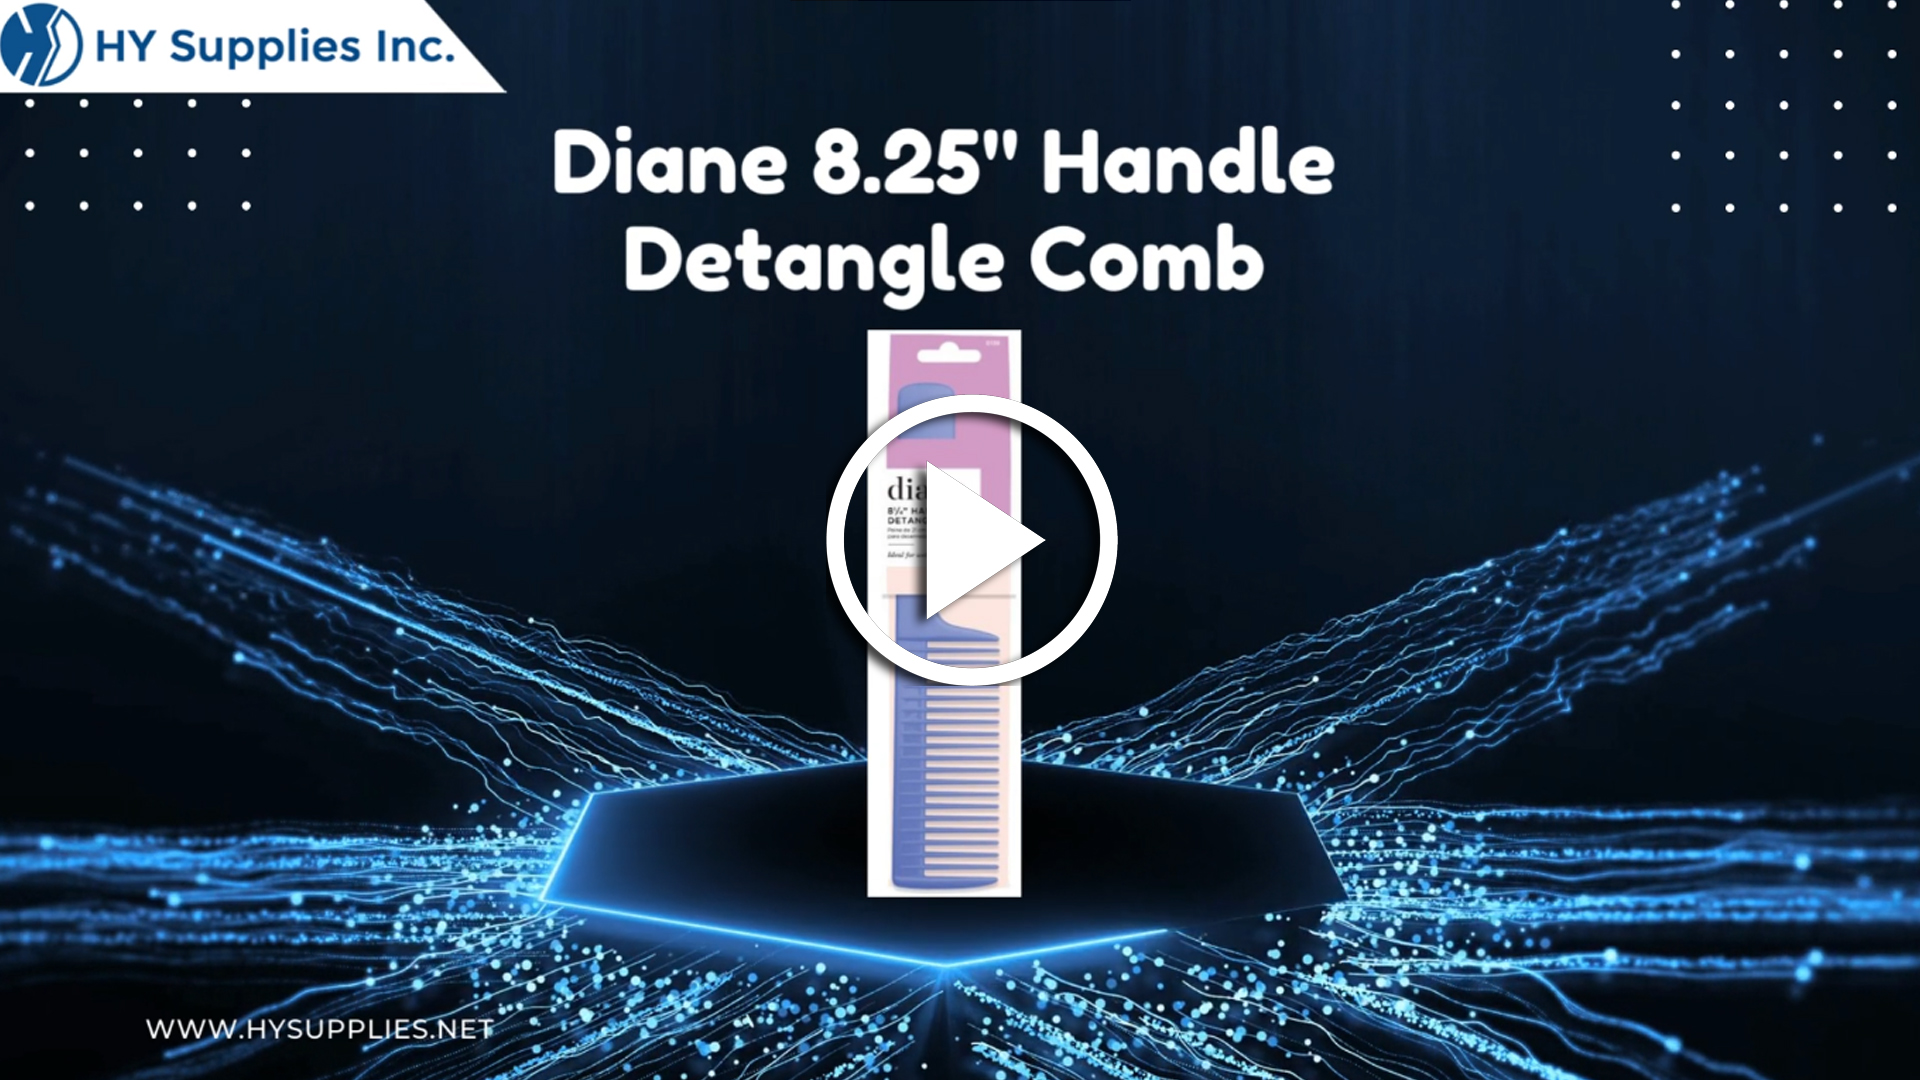 Diane 8.25" Handle Detangle Comb